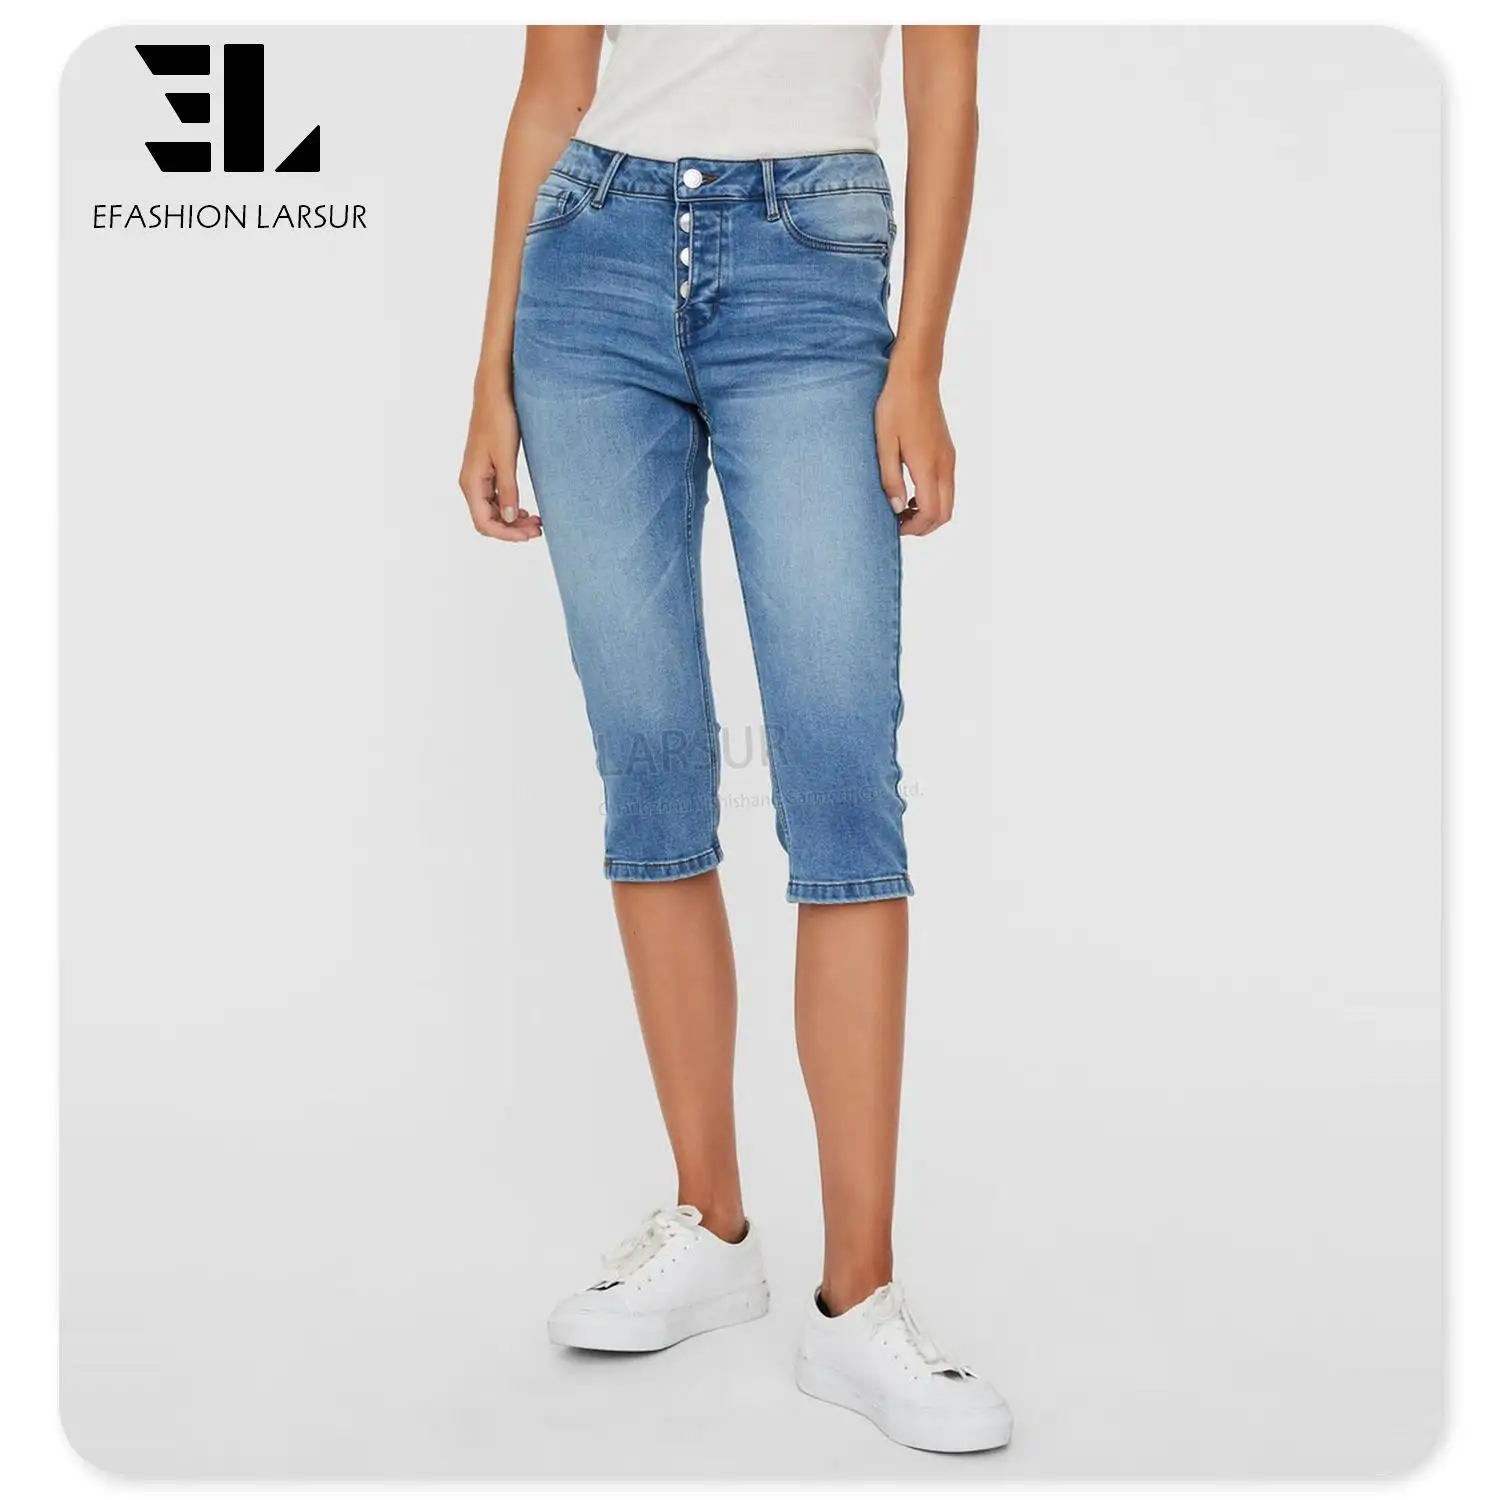 LARSUR Xintang Guangzhou Jeans Jeans Fabrik Hersteller benutzer definierte knielange Skinny Slim Fit Jeans für Damen Damen Jeans hosen